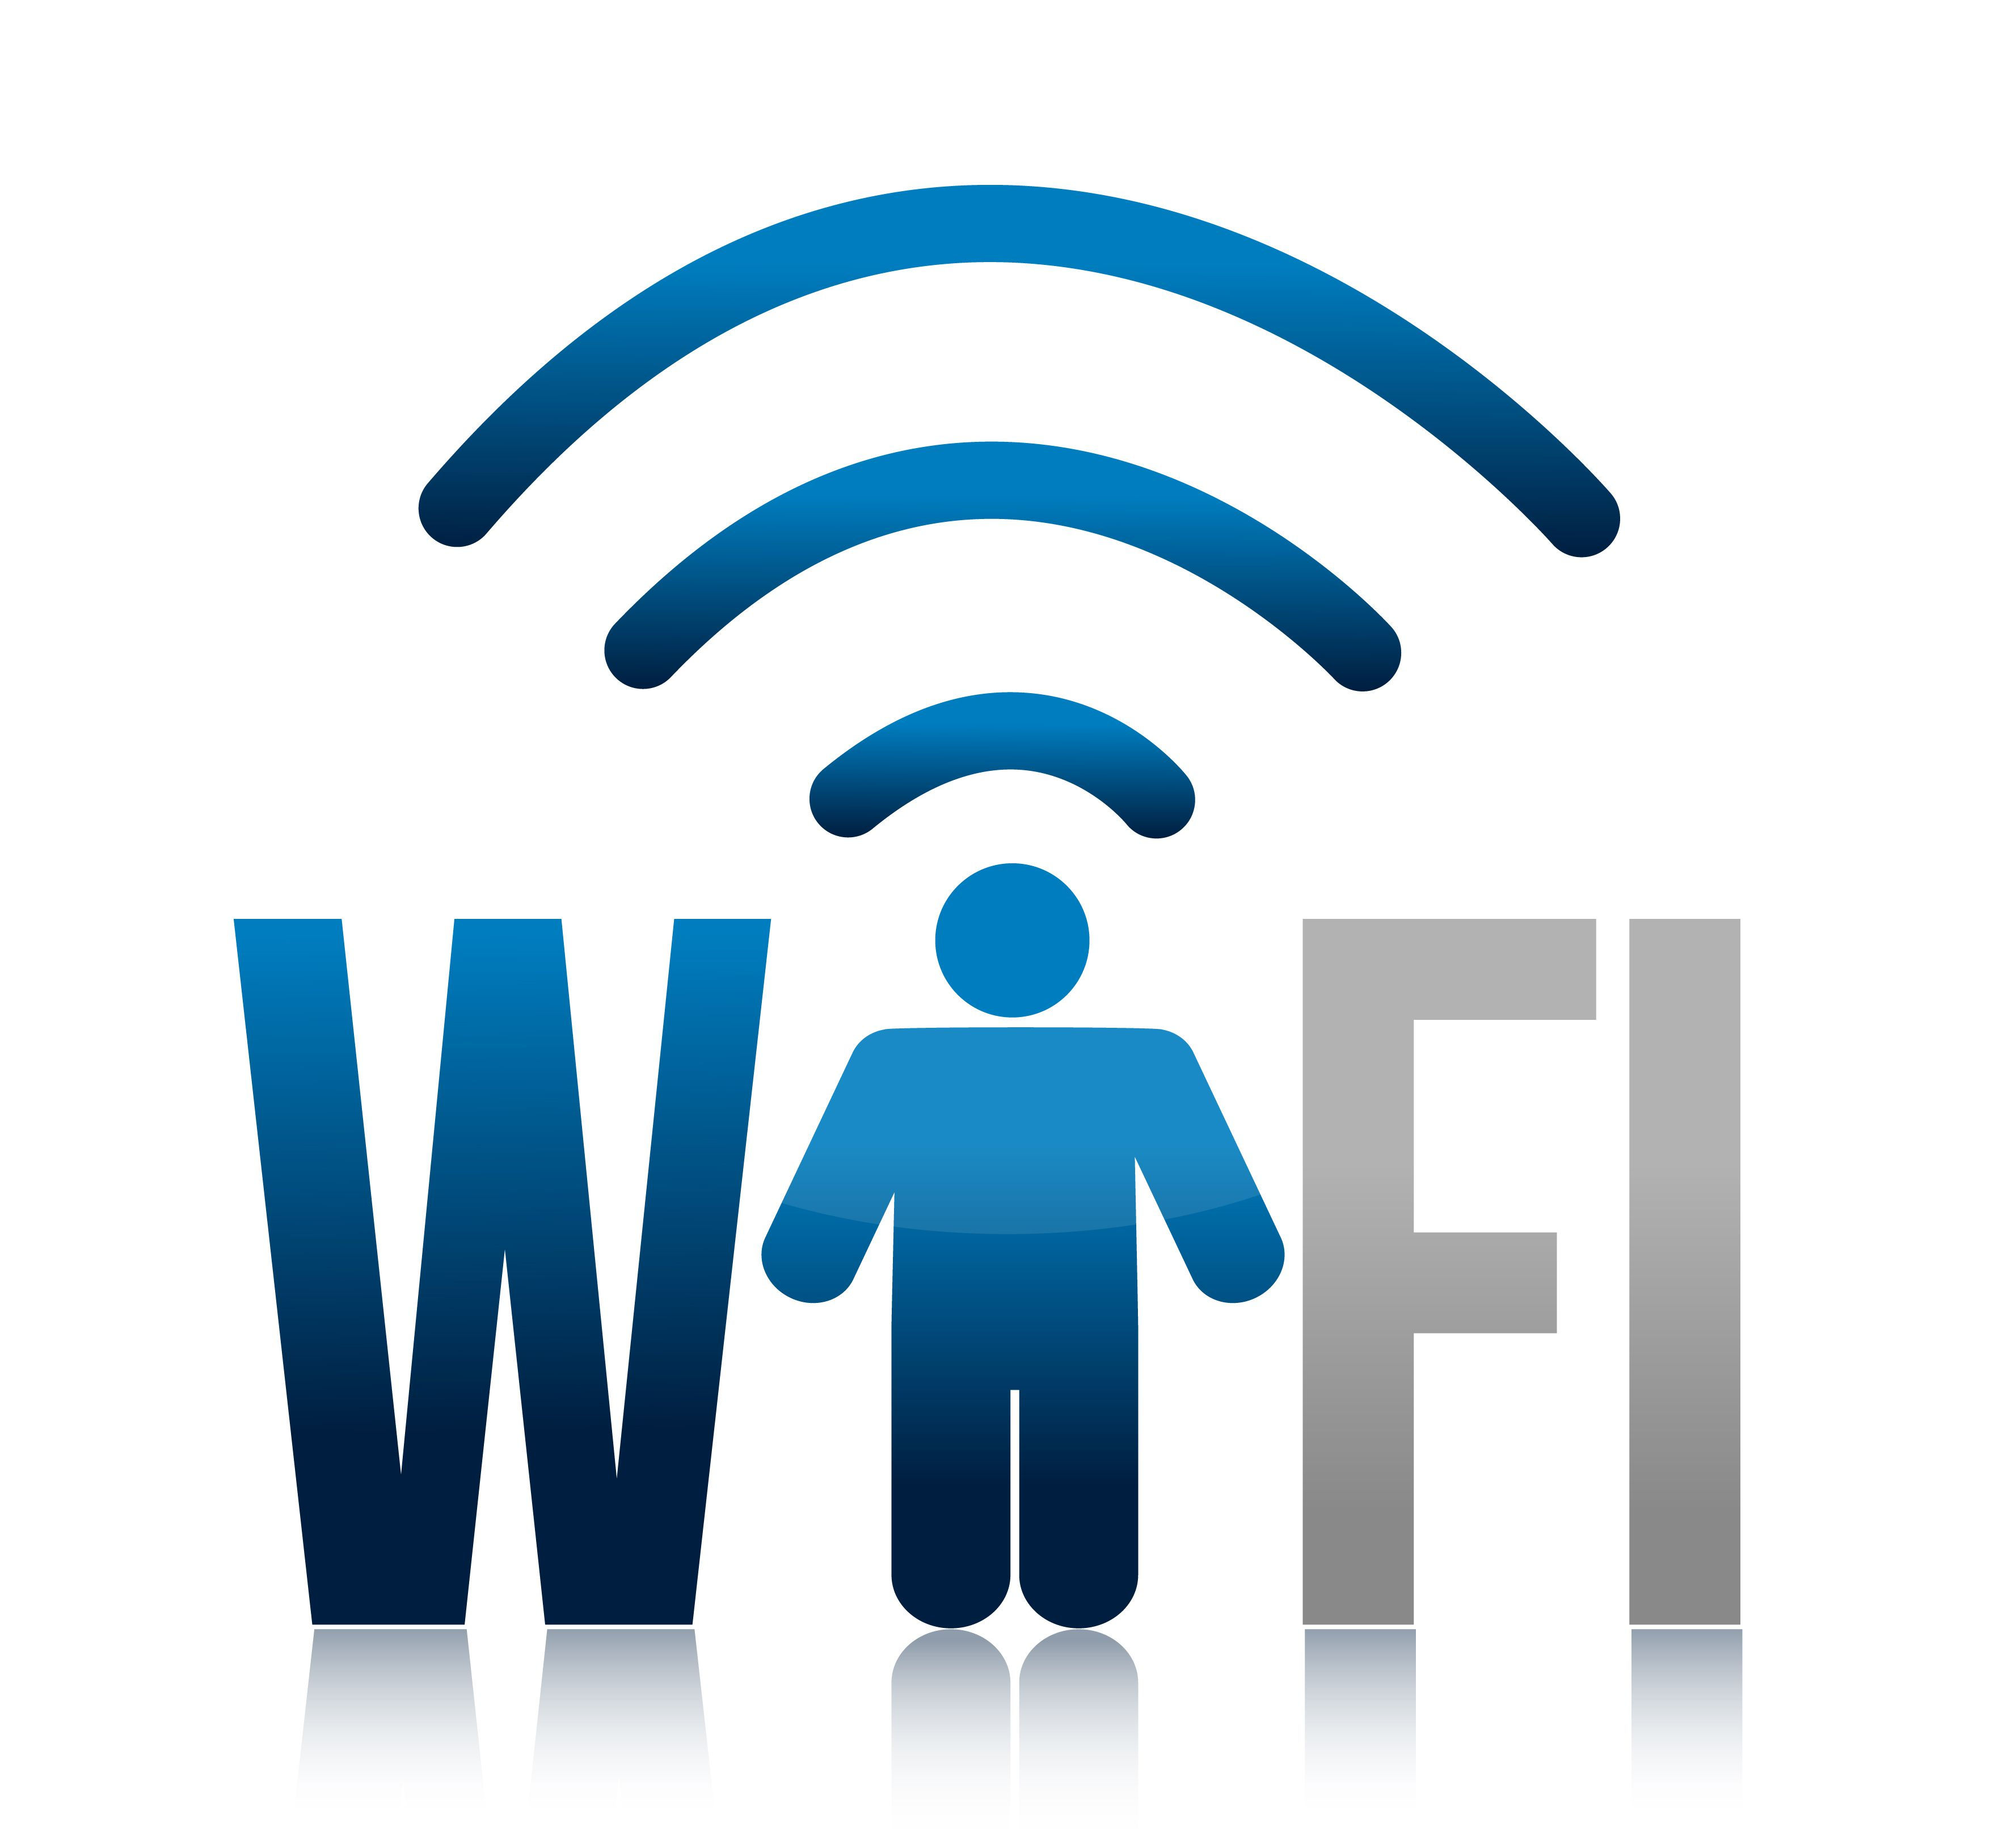 Wifi 3 games. Вай фай. Беспроводные сети Wi-Fi. Значок WIFI. Беспроводной Wi Fi.